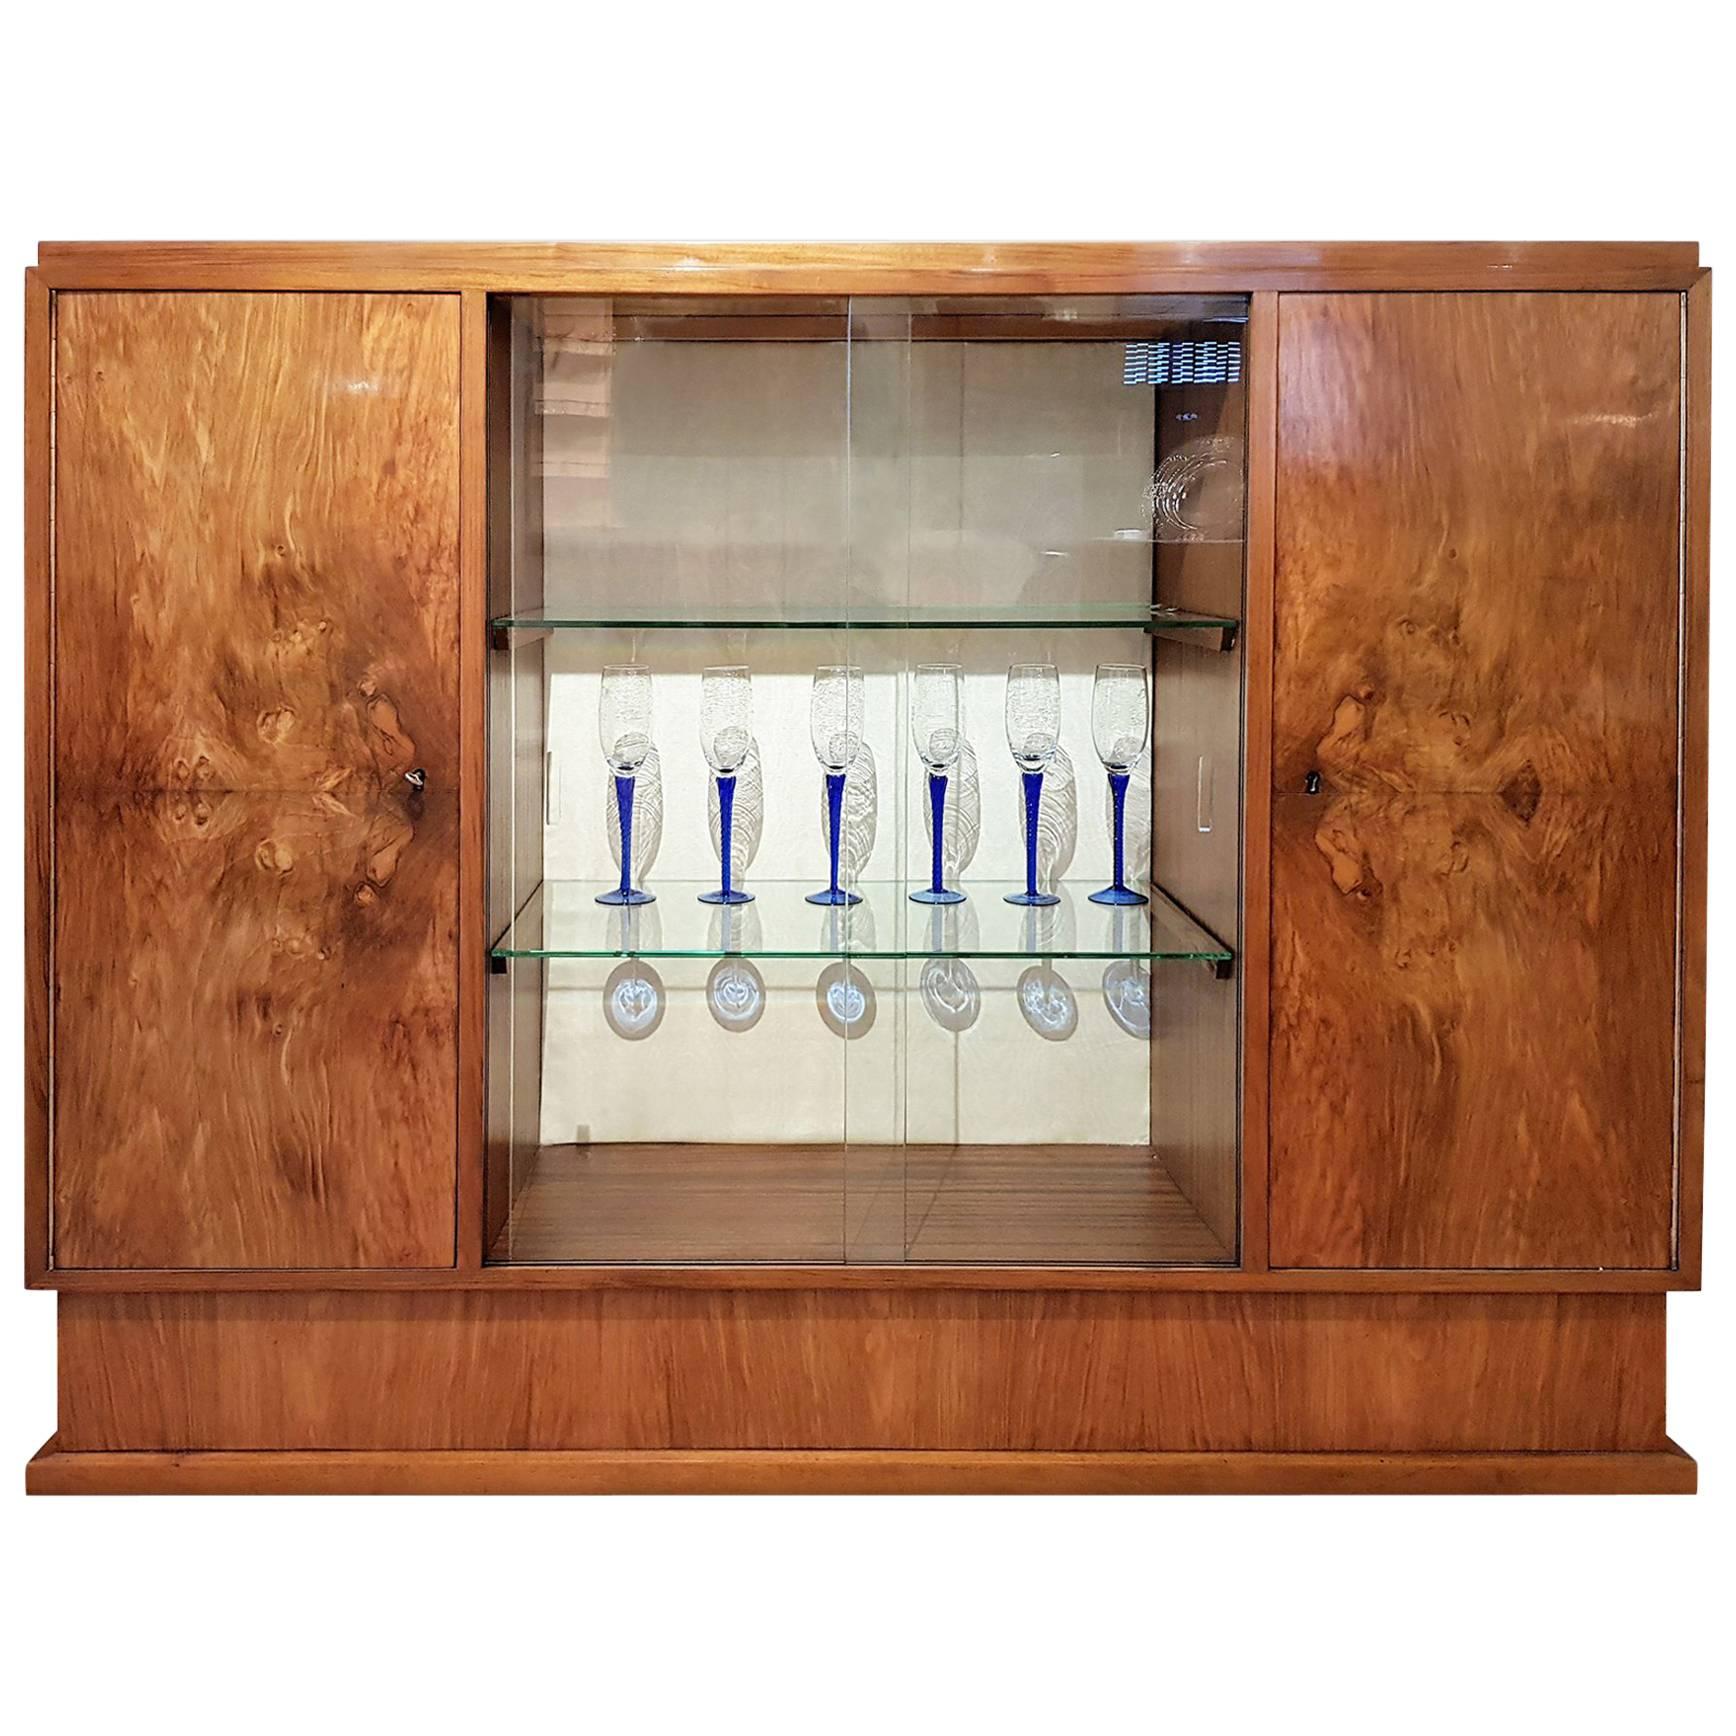 Original Art Deco Walnut Display Cabinet in the Modernist Style